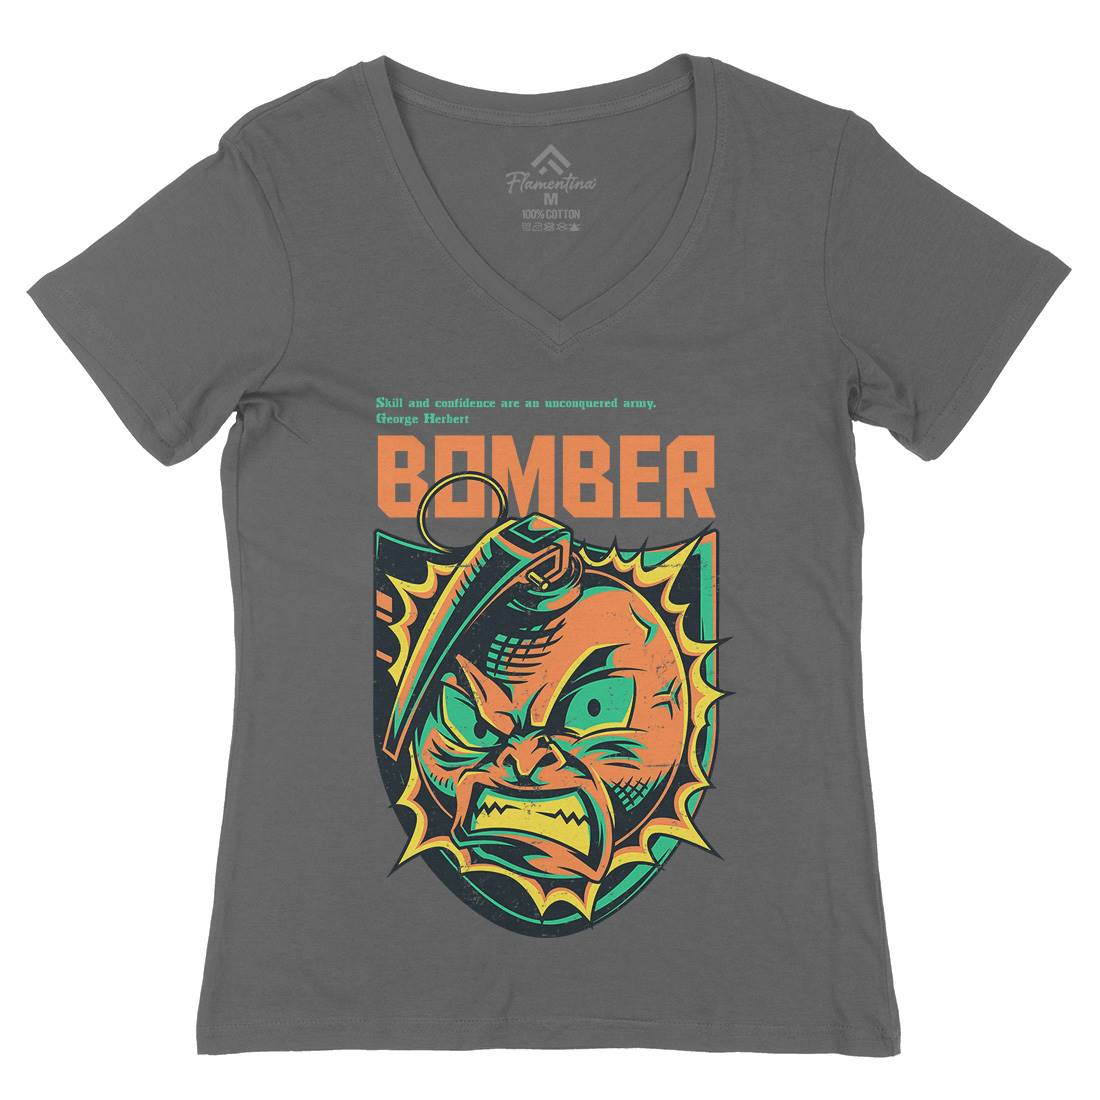 Bomber Grenade Womens Organic V-Neck T-Shirt Army D846